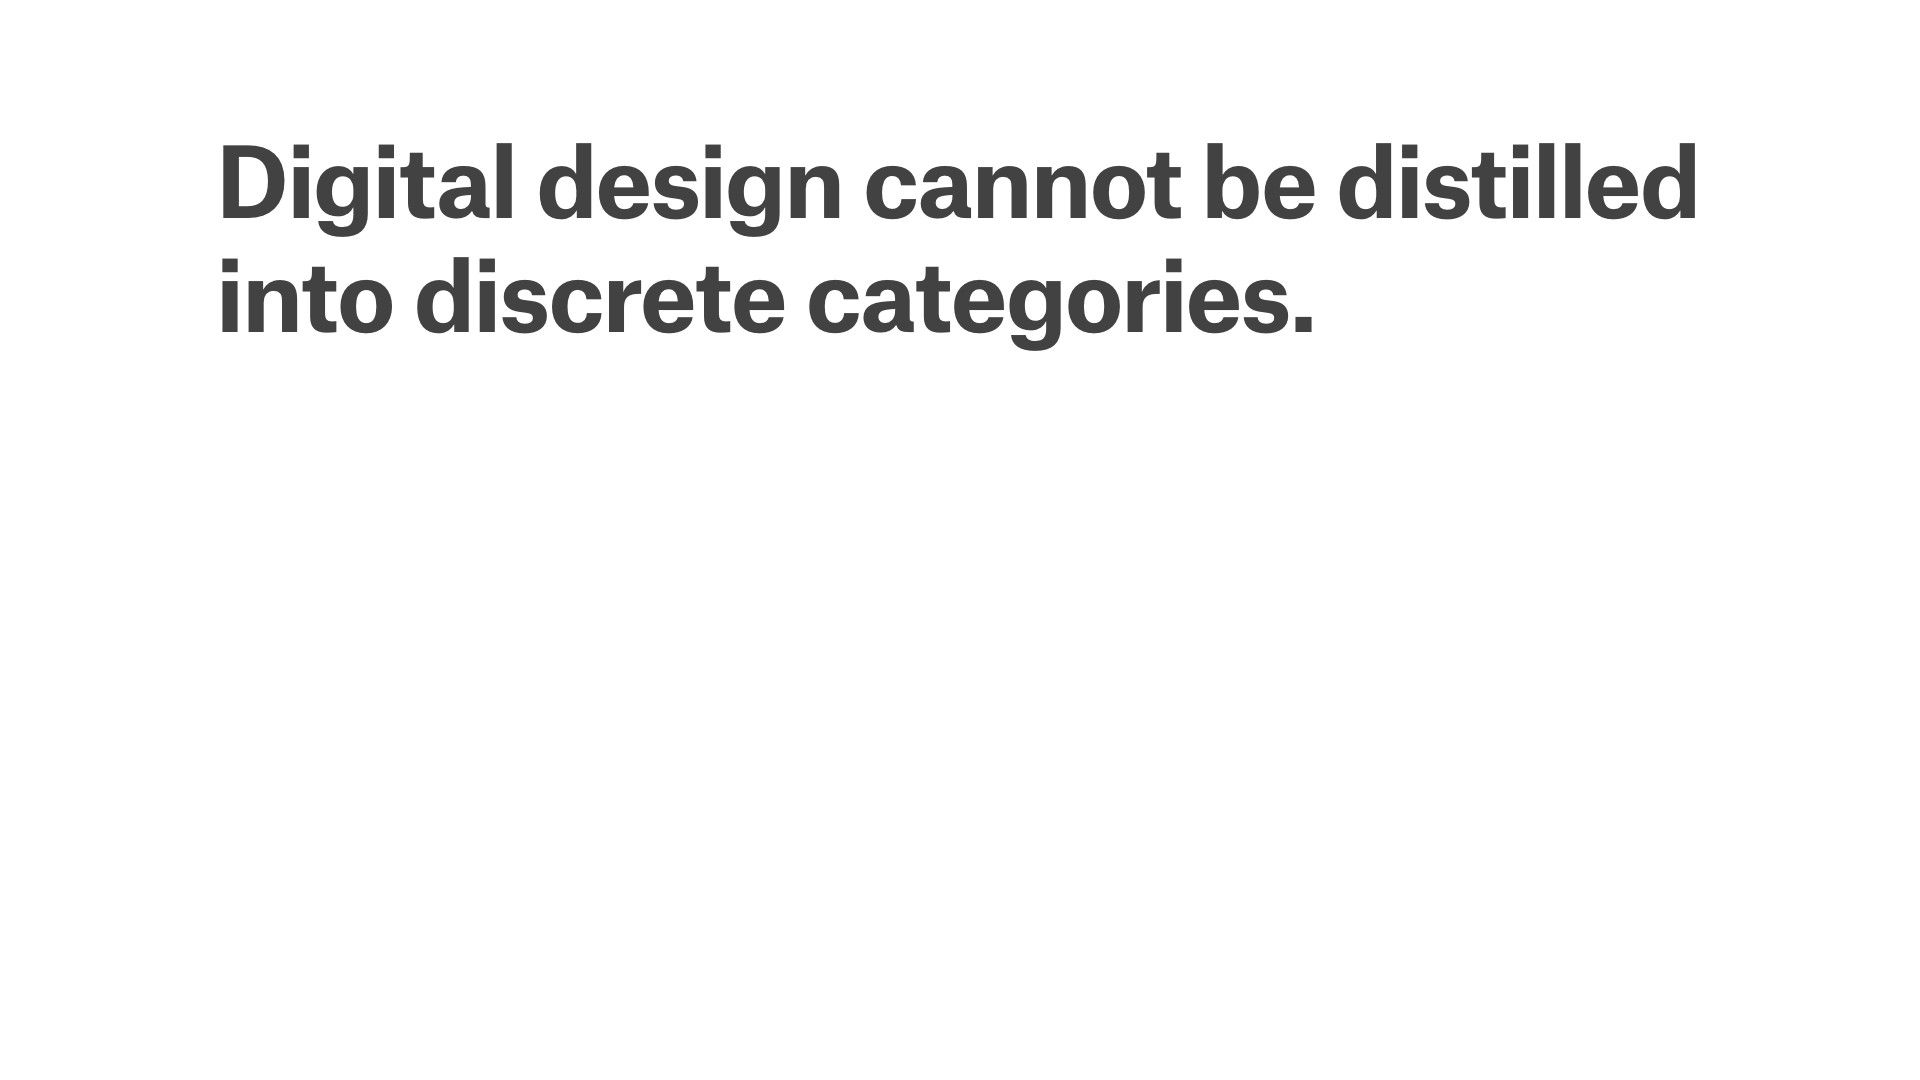 Digital design cannot be distilled into discrete categories